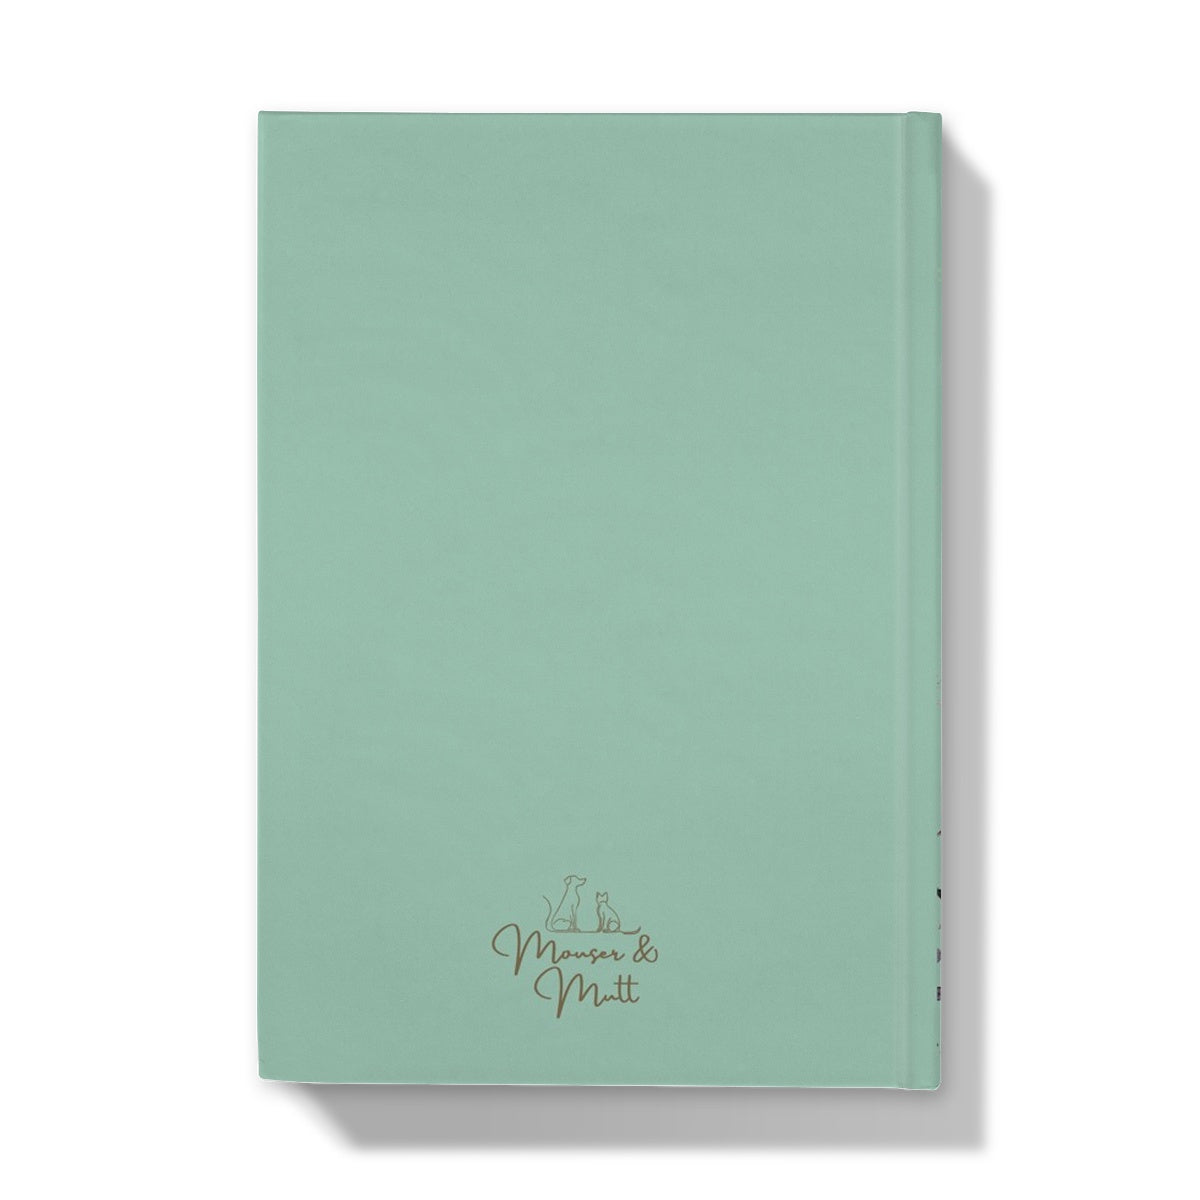 Cocker Spaniel Hardback Journal